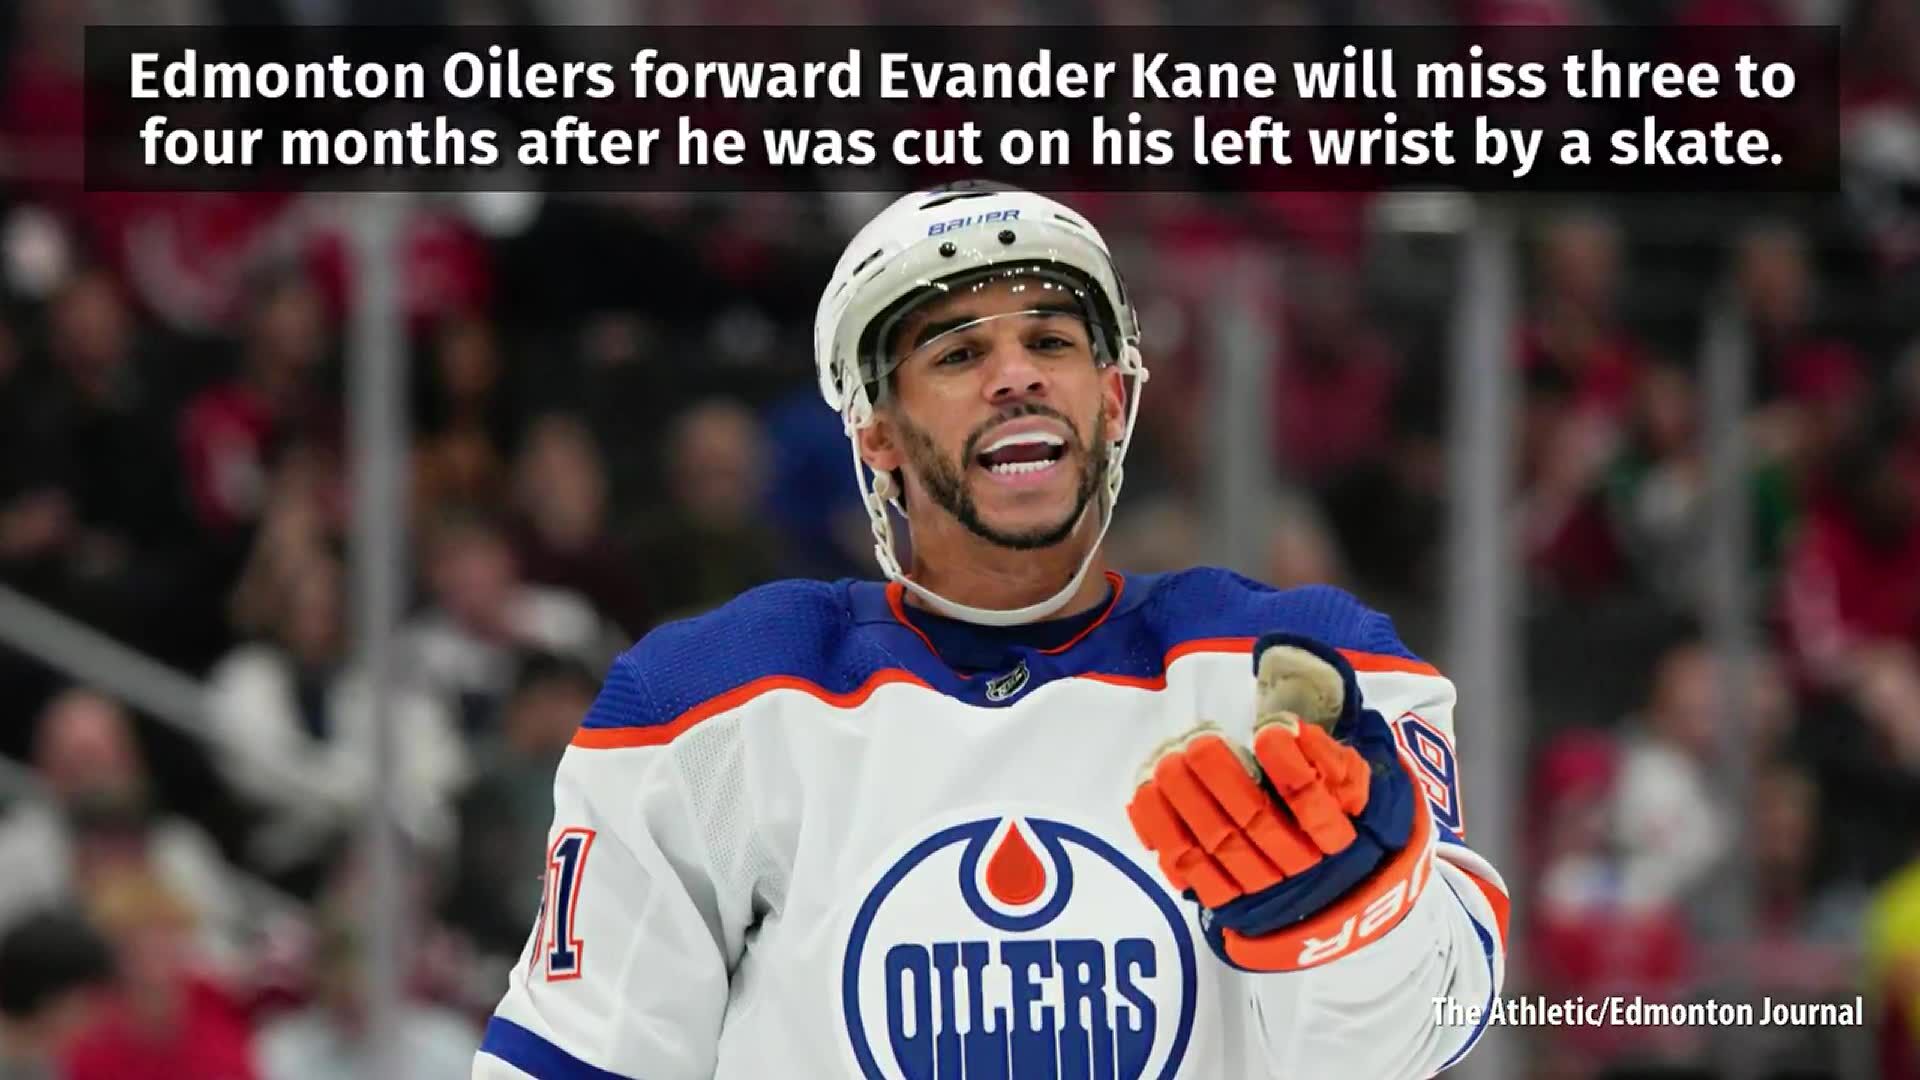 Edmonton Oilers forward Evander Kane to miss 3-4 months after wrist cut by skate Trending fox23